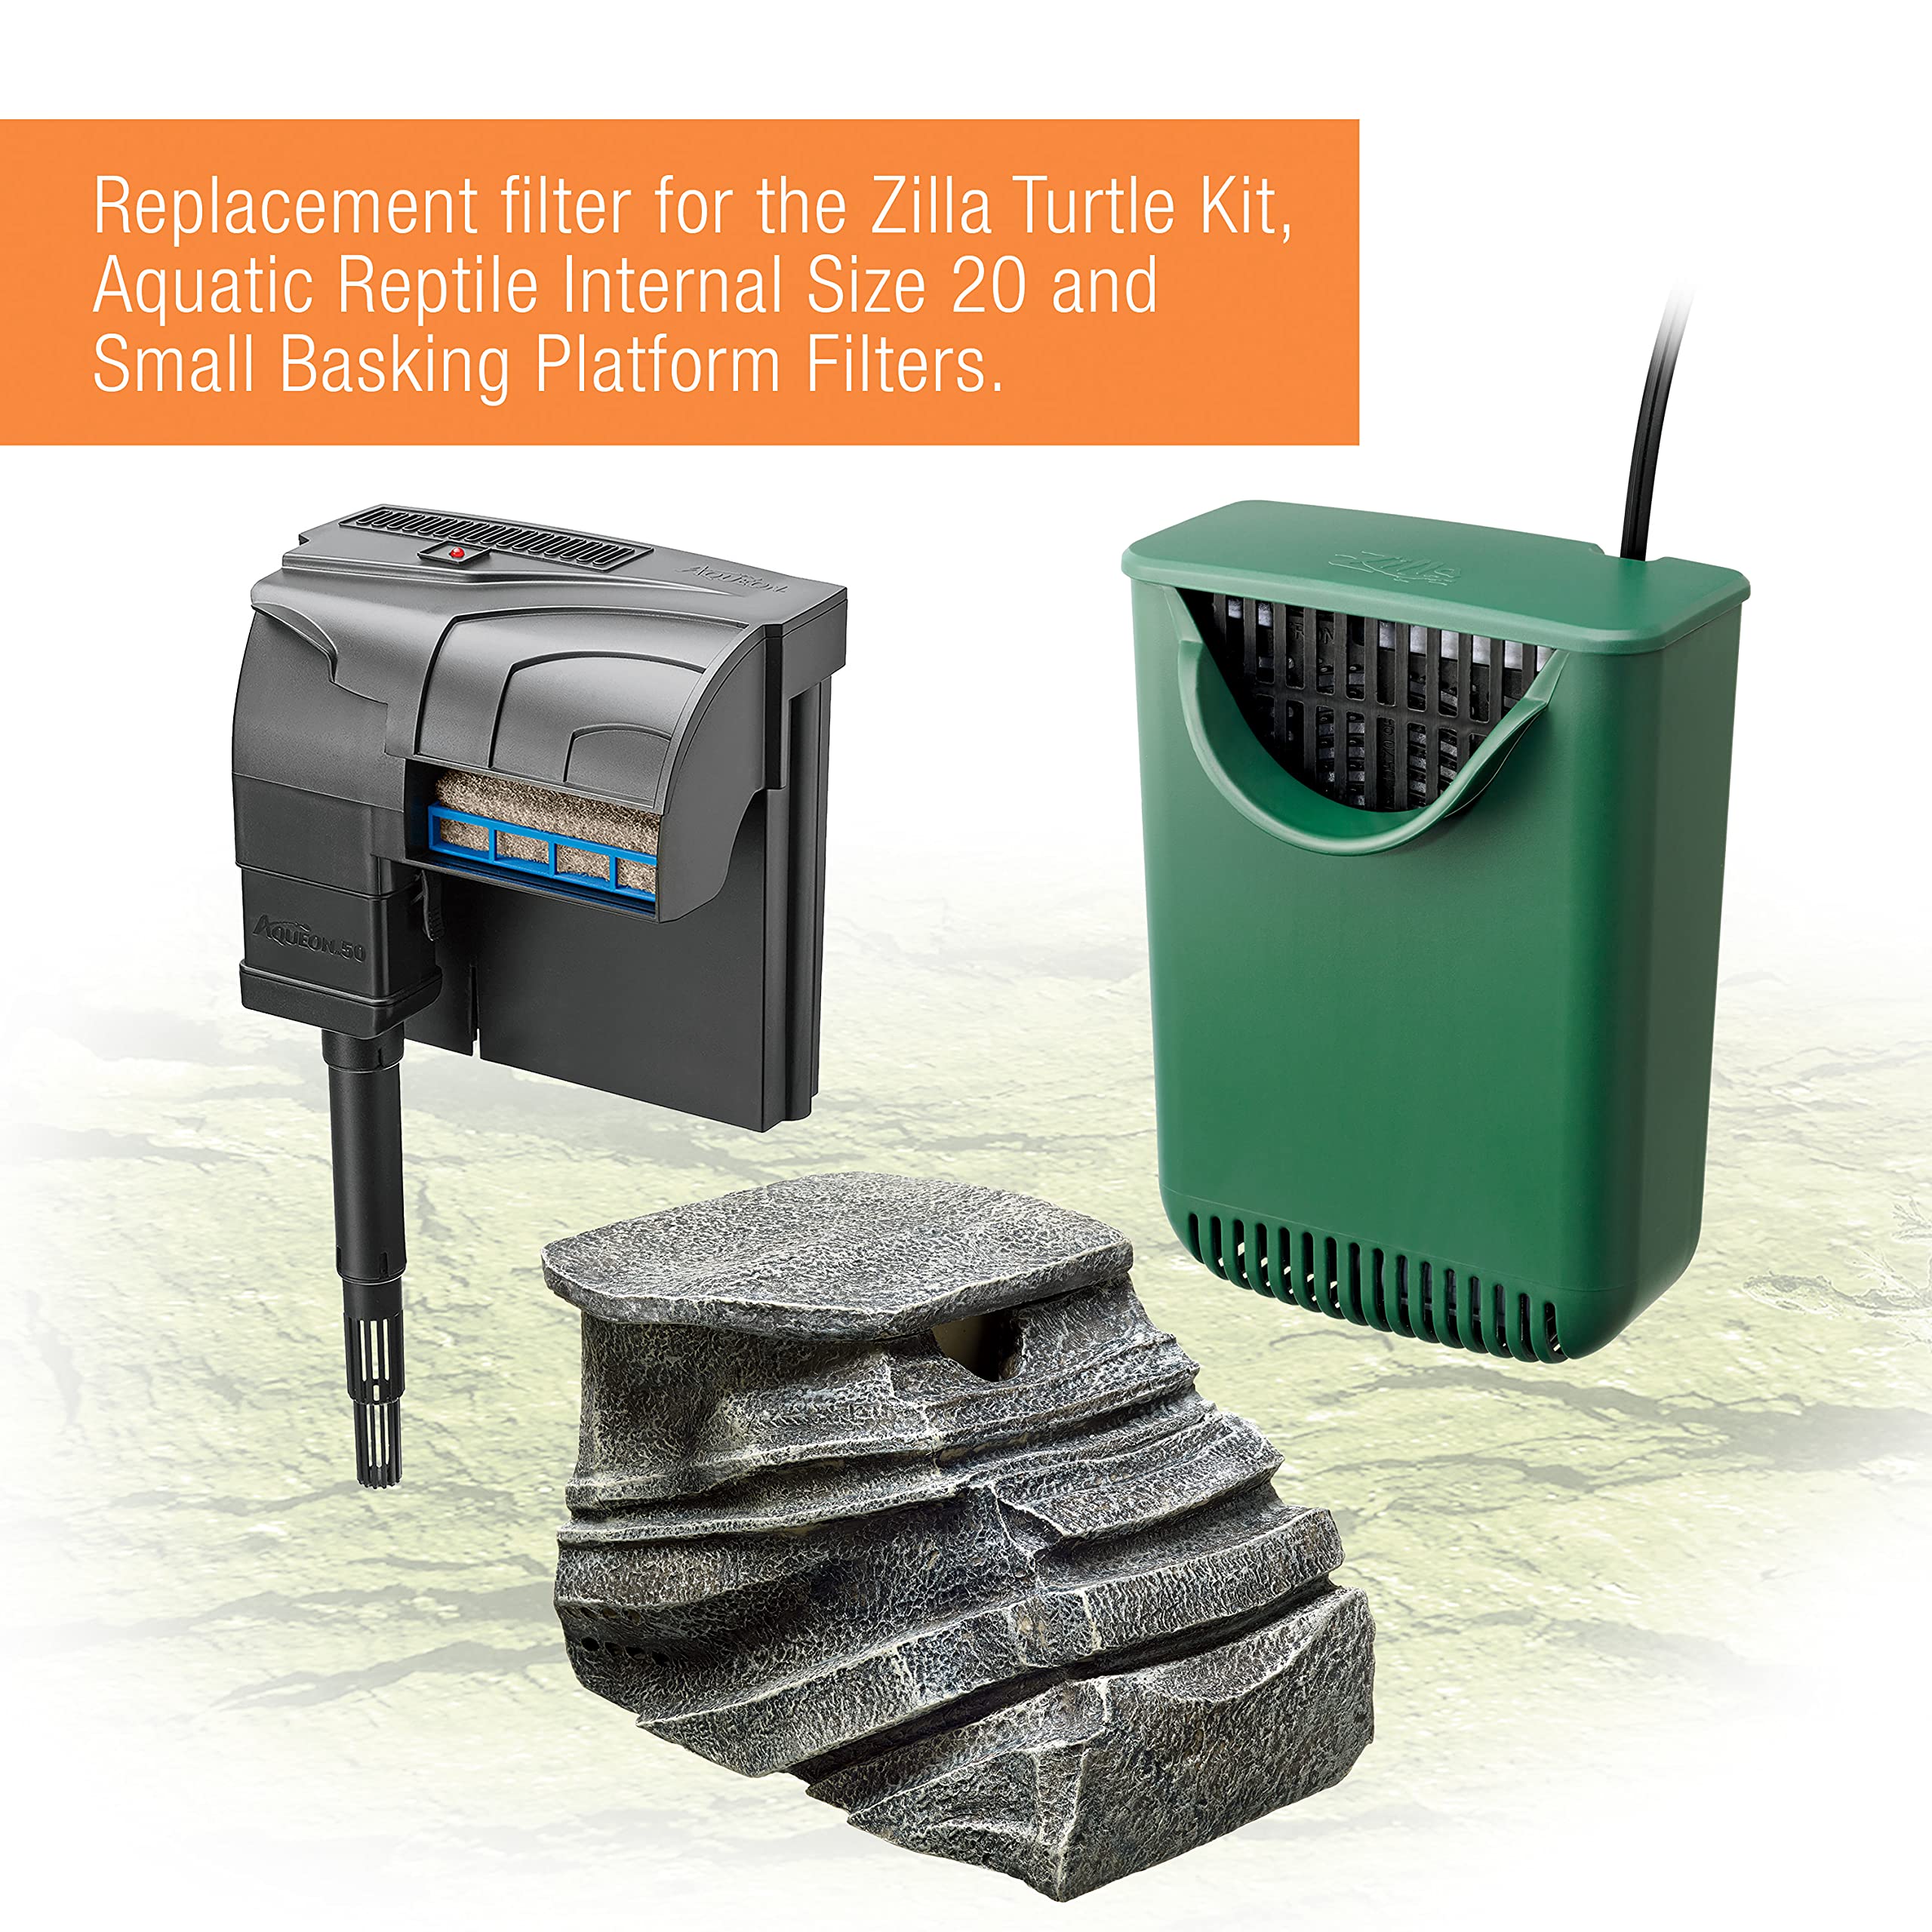 Zilla Replacement Filter Cartridges Medium, 3 Pack